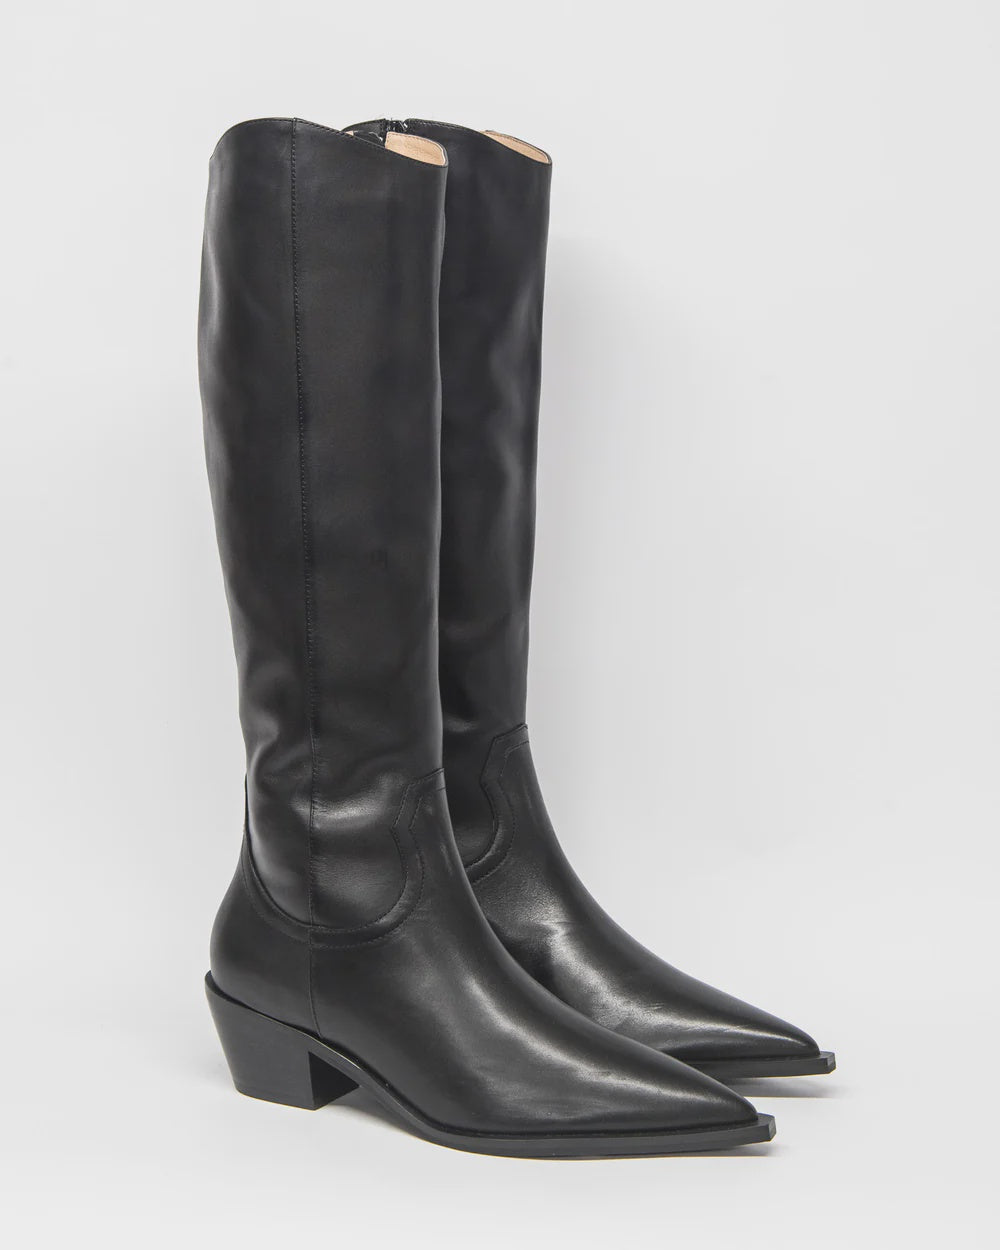 Ratify Boot - Black Leather Shoes Zoe Kratzmann   